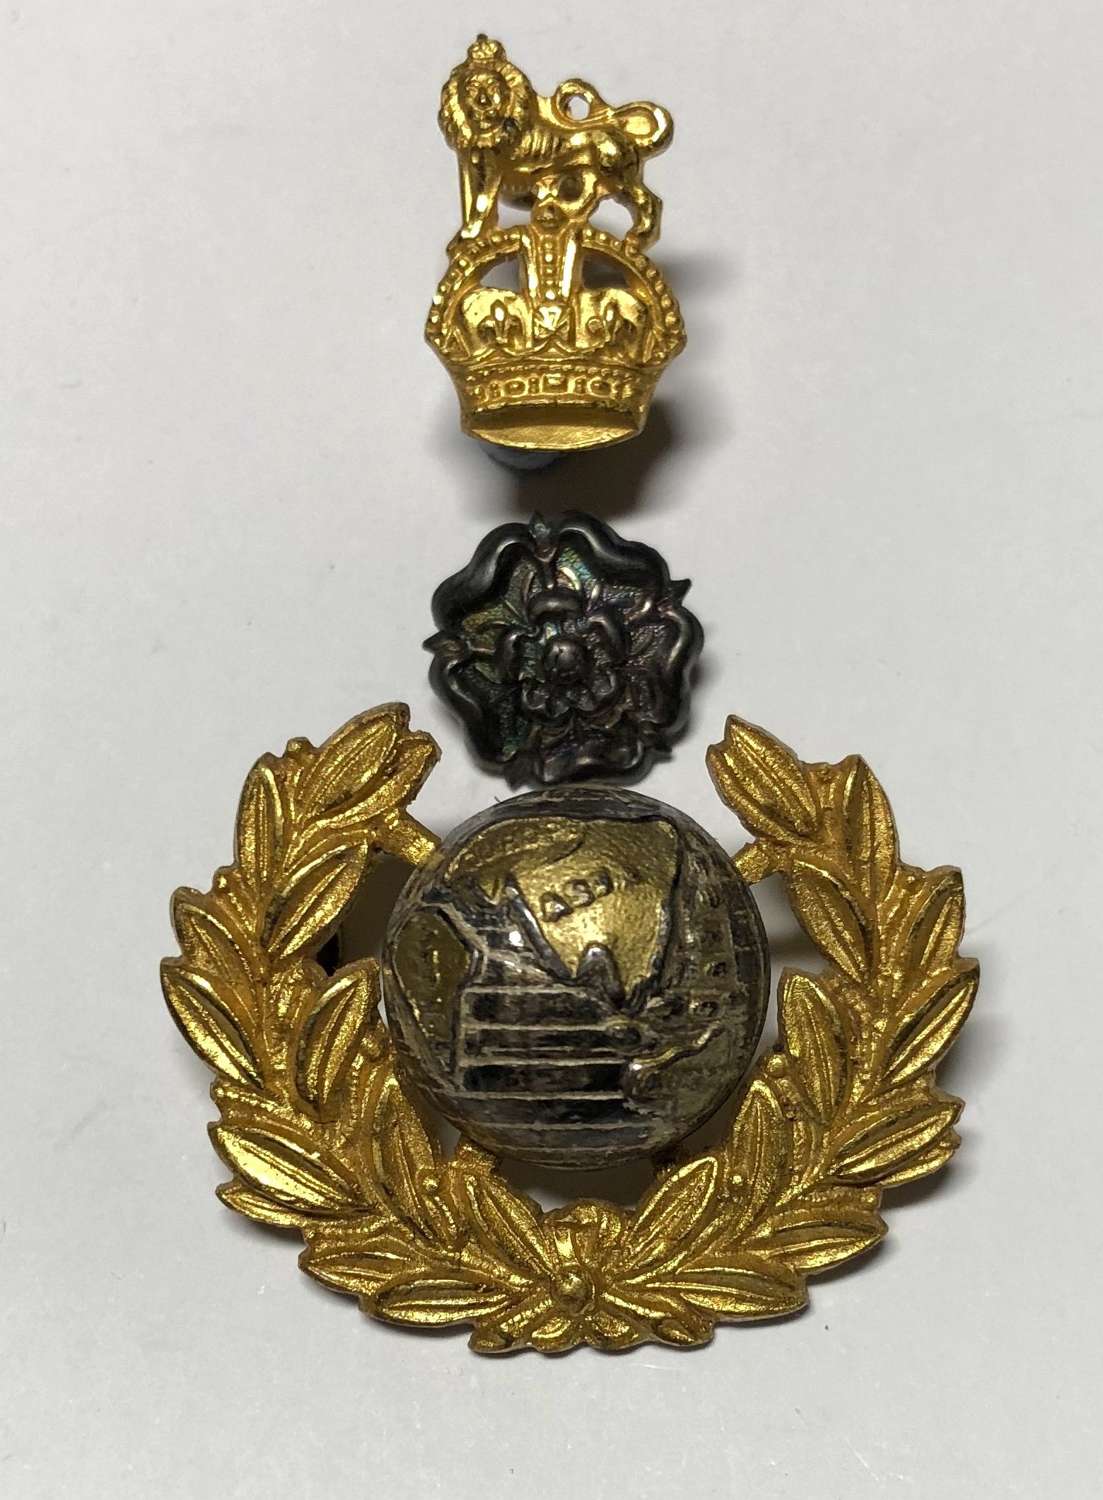 Chatham Division Royal Marine Band Officer's cap badge c1923-50